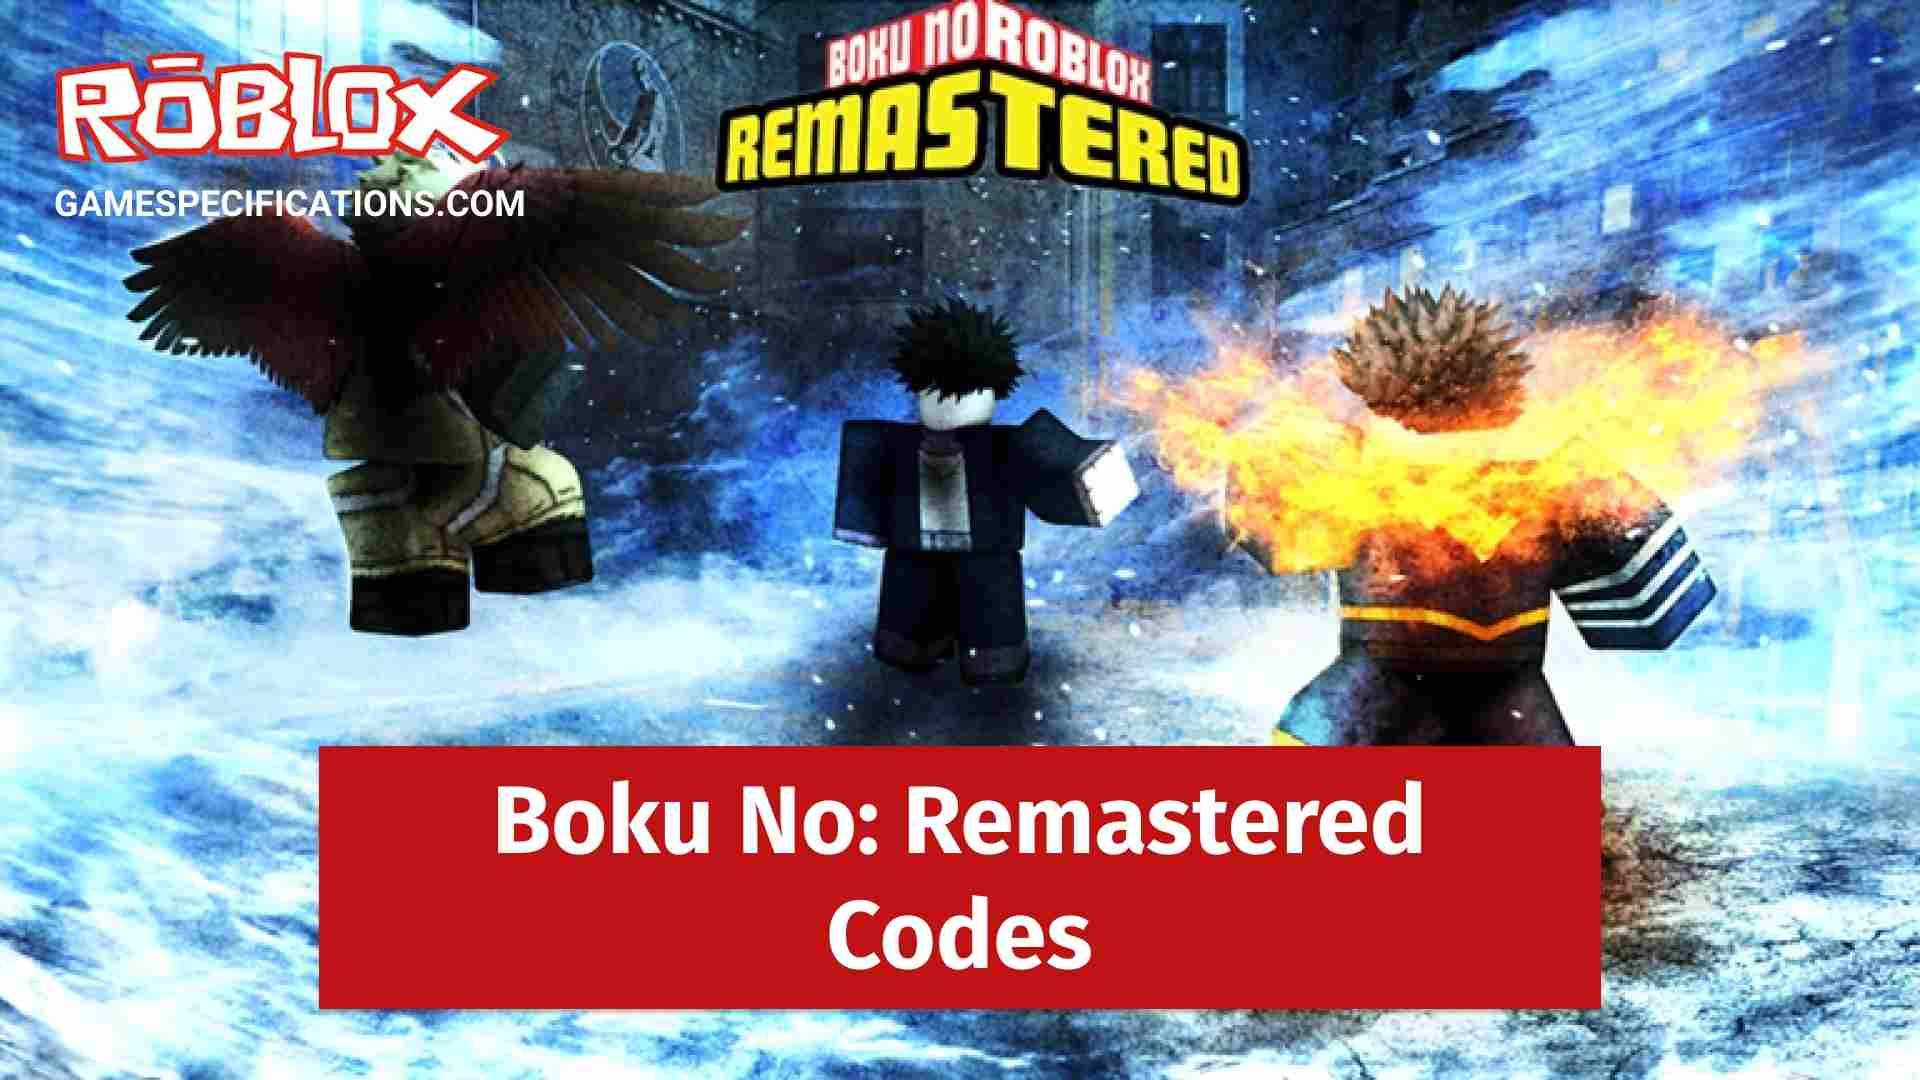 Boku No Roblox Remastered Codes July 2021 Game Specifications - boku no roblox remastered codes all for one